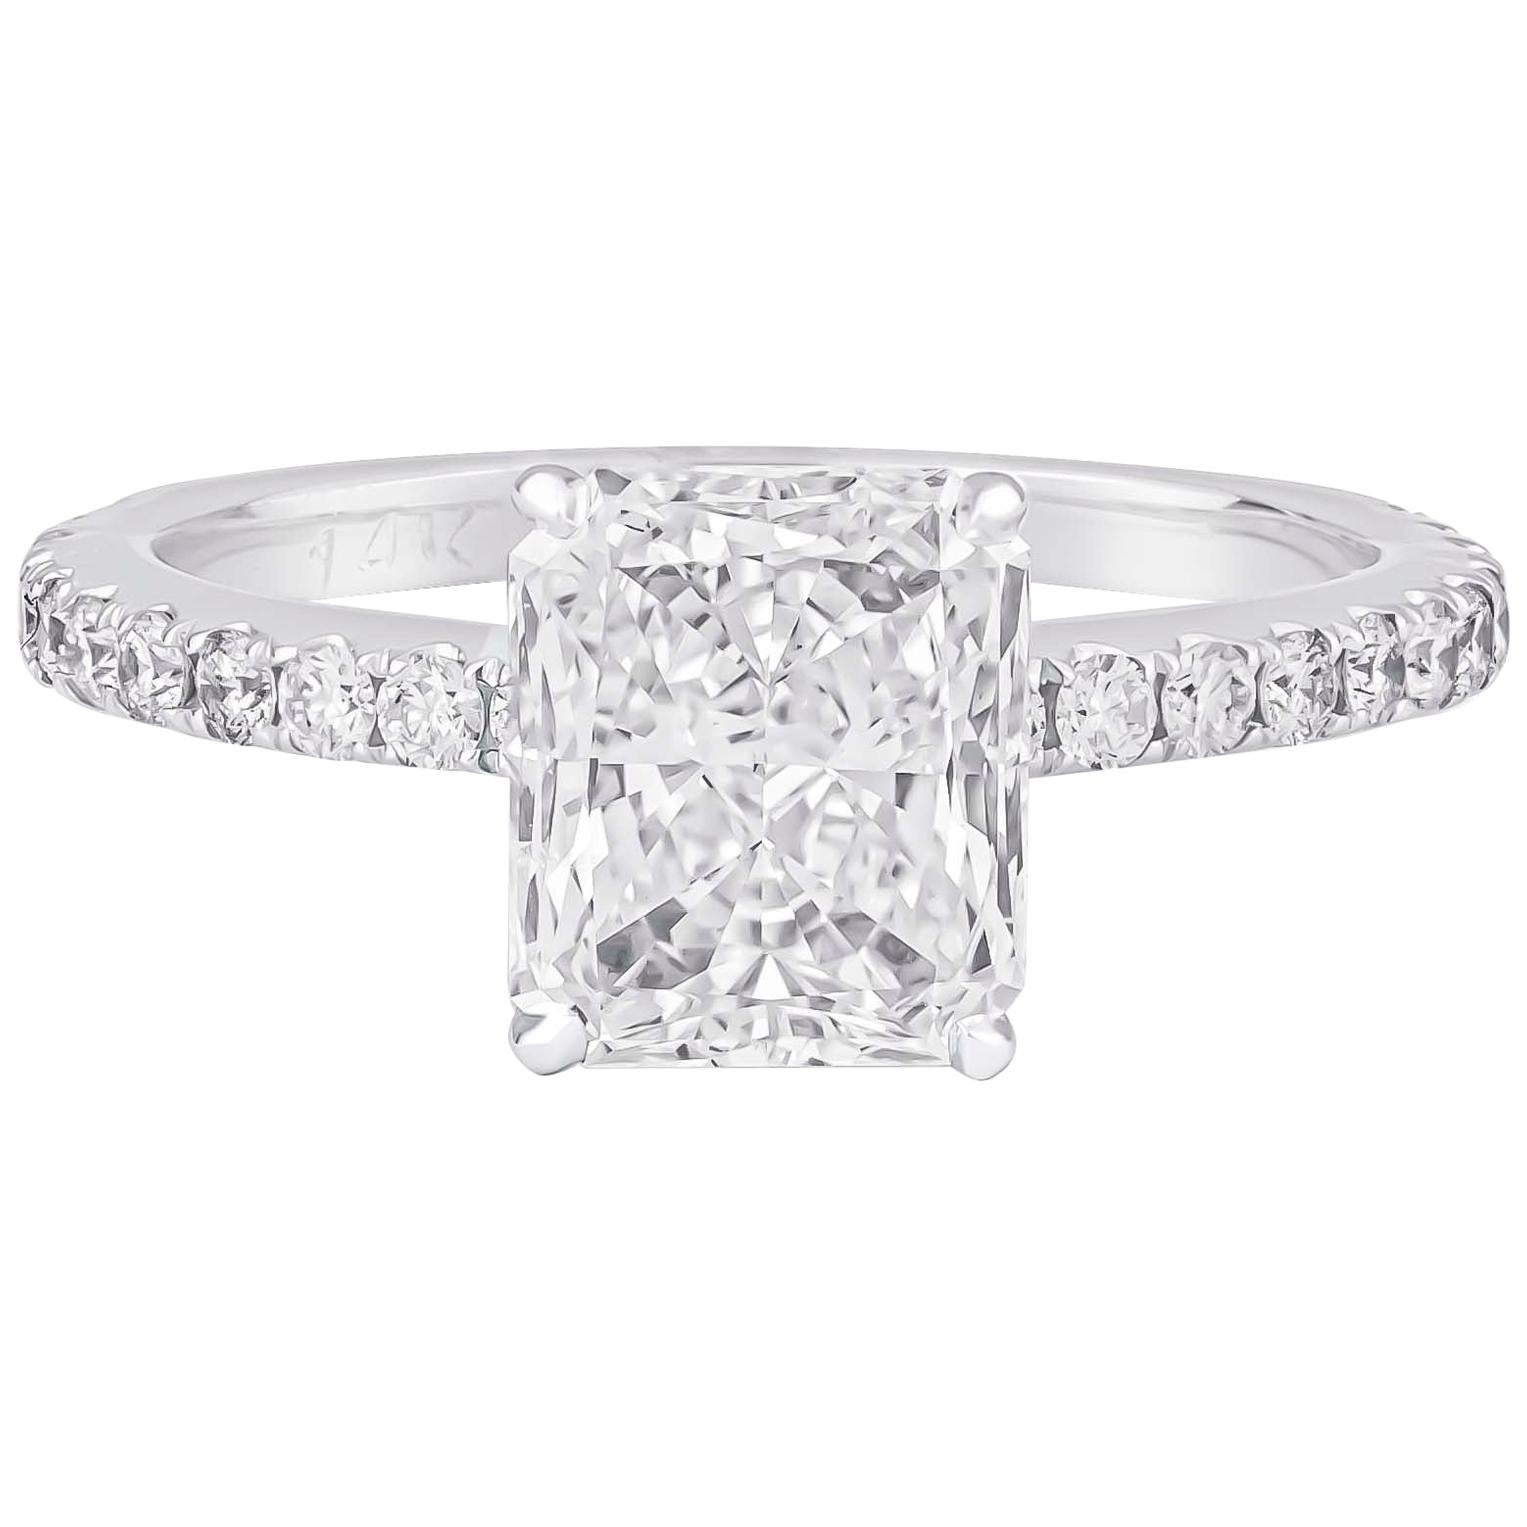 1.54 Carat Radiant Cut 'EGL' Diamond Engagement Ring, 18 Karat